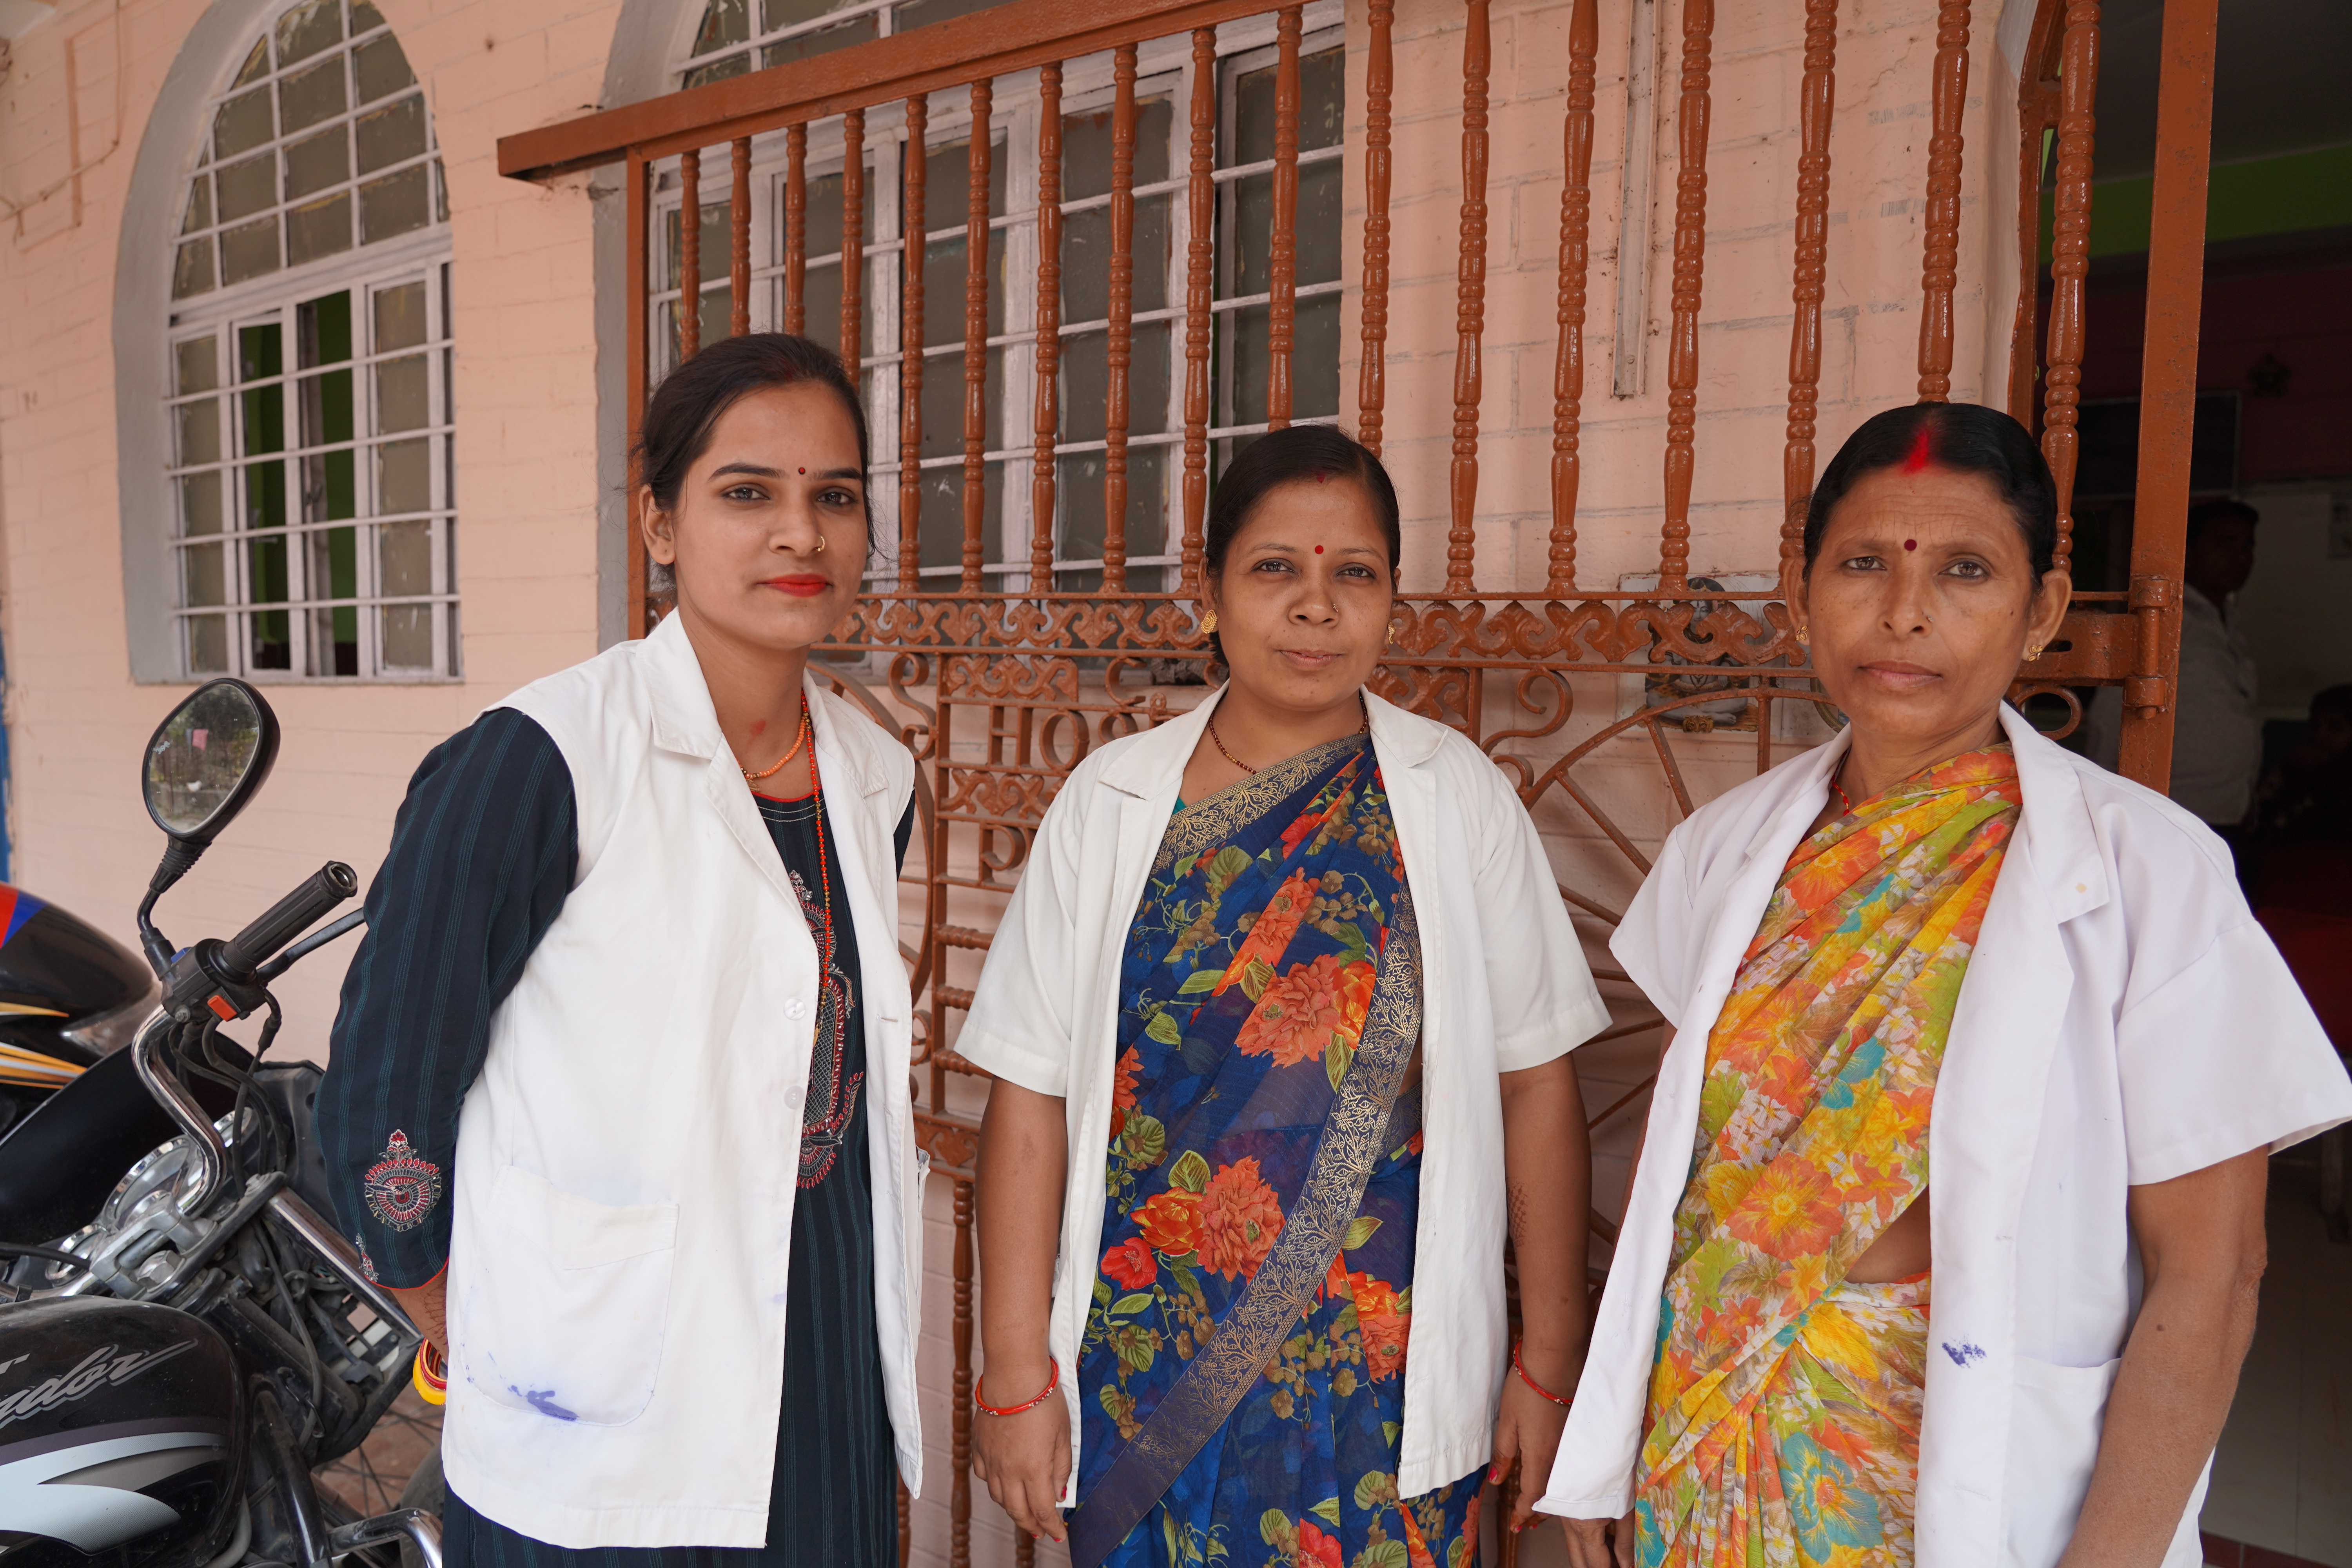 Lovely Kumari, Poonam Jha, and Kavita Kumari are nurses